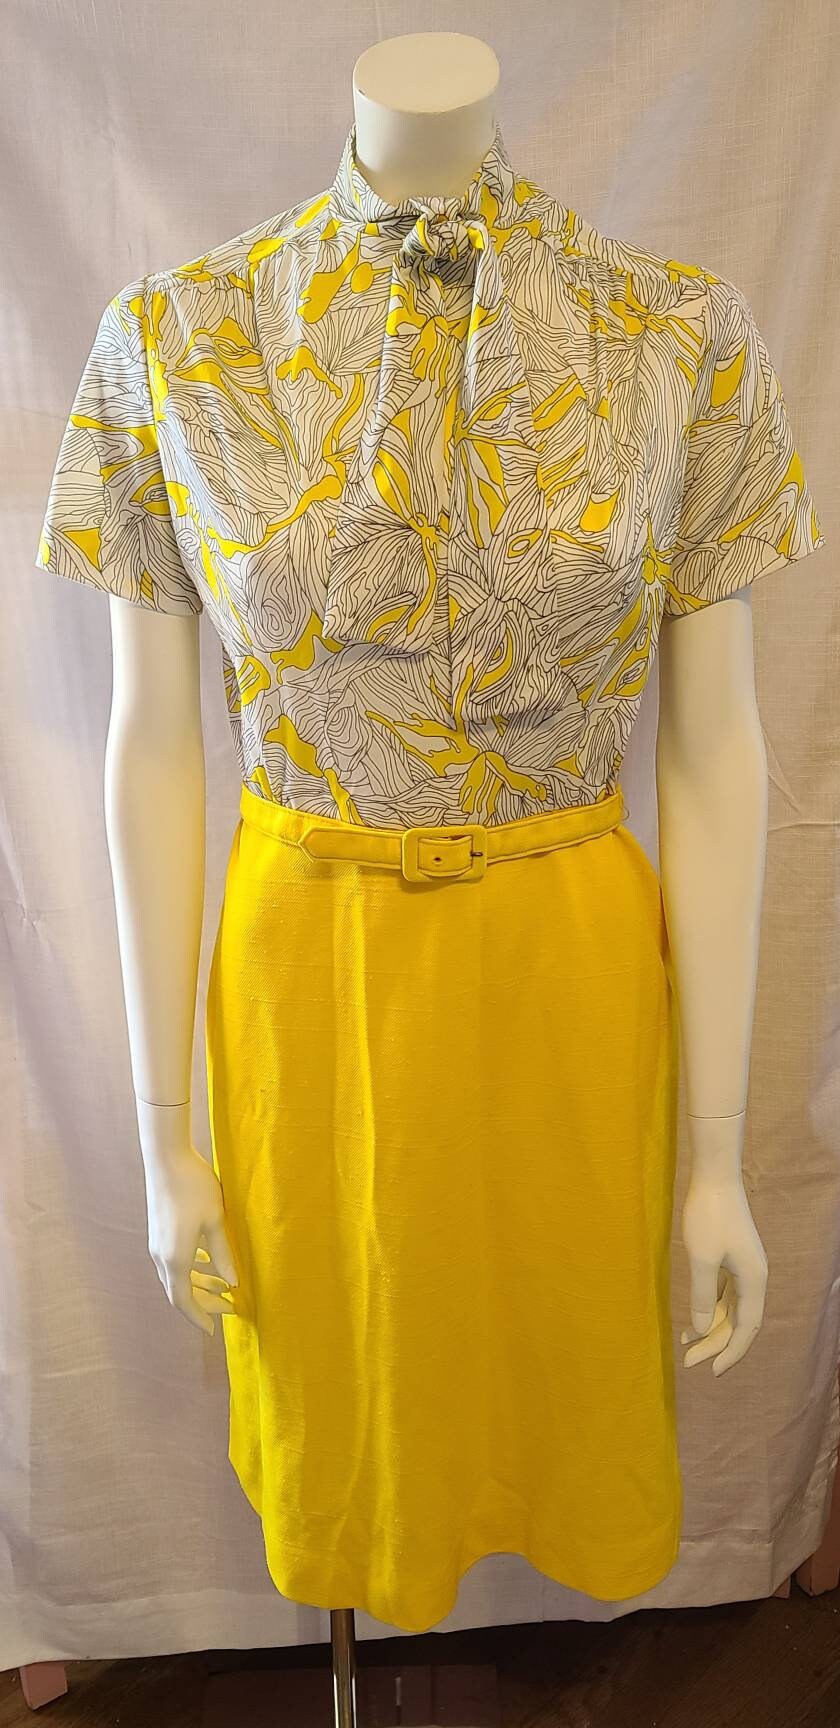 SALE Vintage 1960s Dress Bright Yellow White Floral Print Neck Tie Neck Bow Dress Belt Mod Go Go XS S chest 34 in.